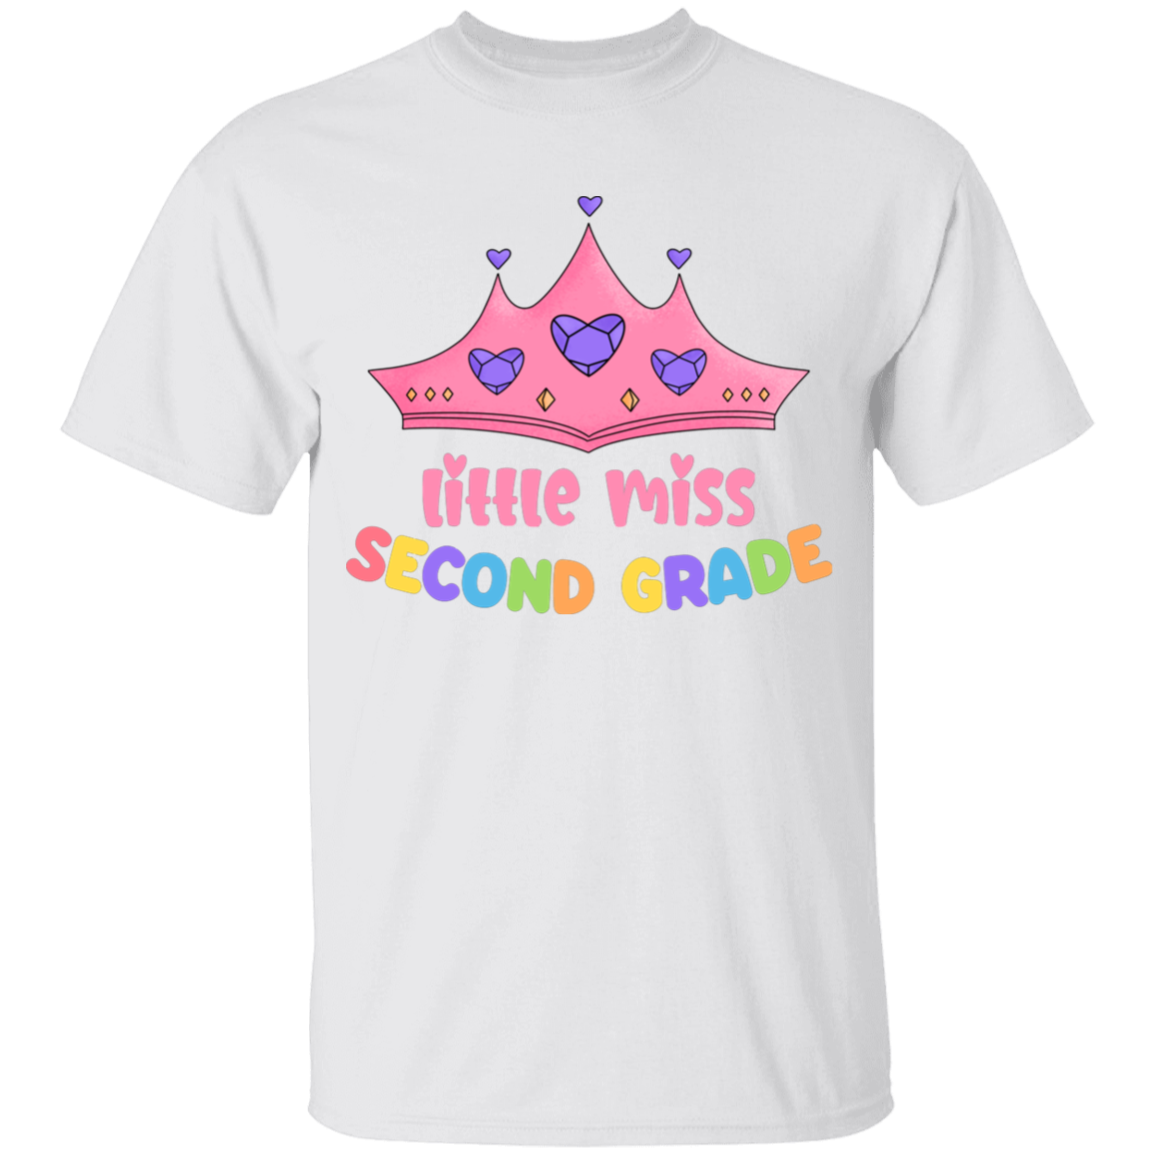 Little Miss Second Grade Youth Cotton T-Shirt